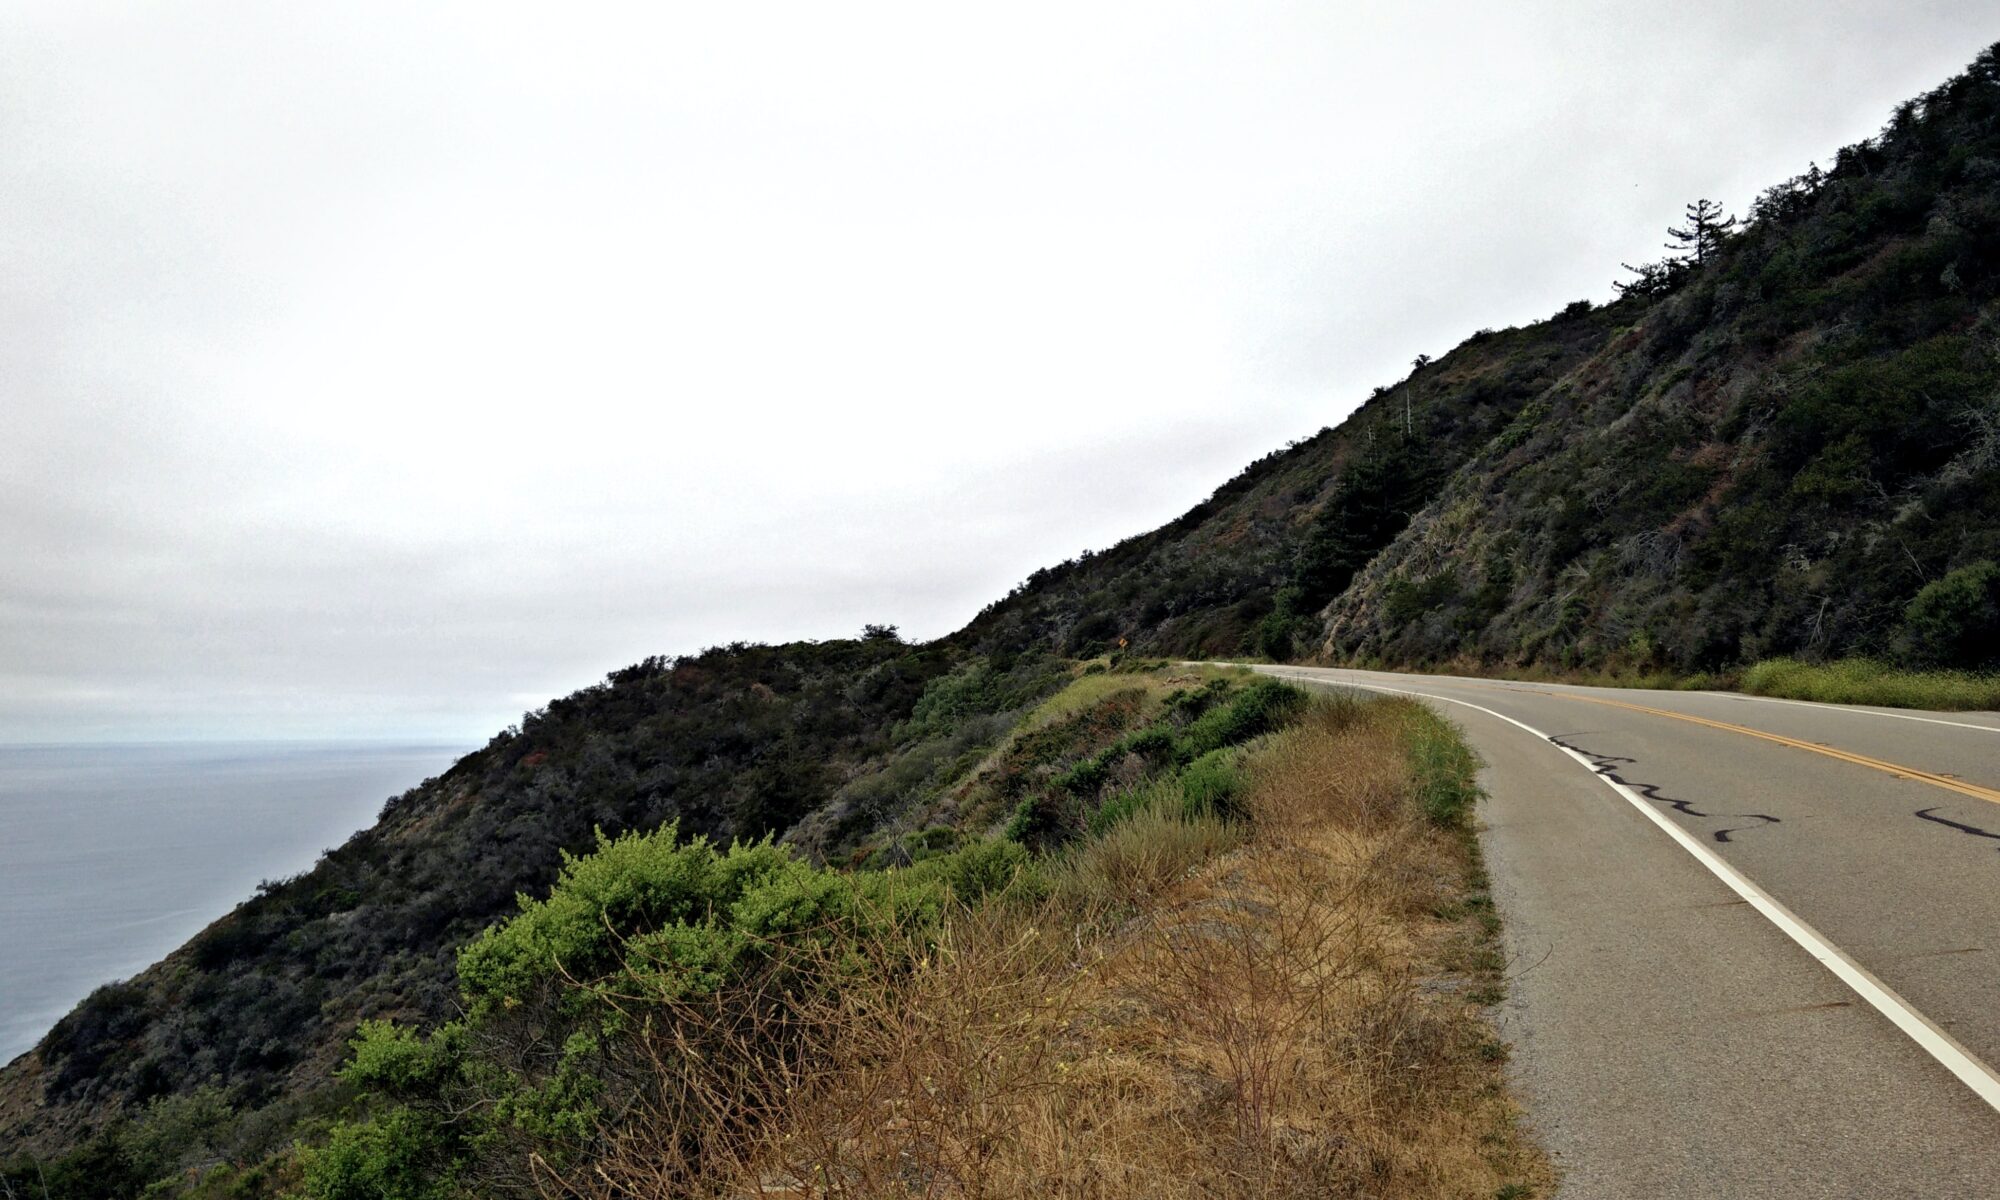 The open road near the ocean